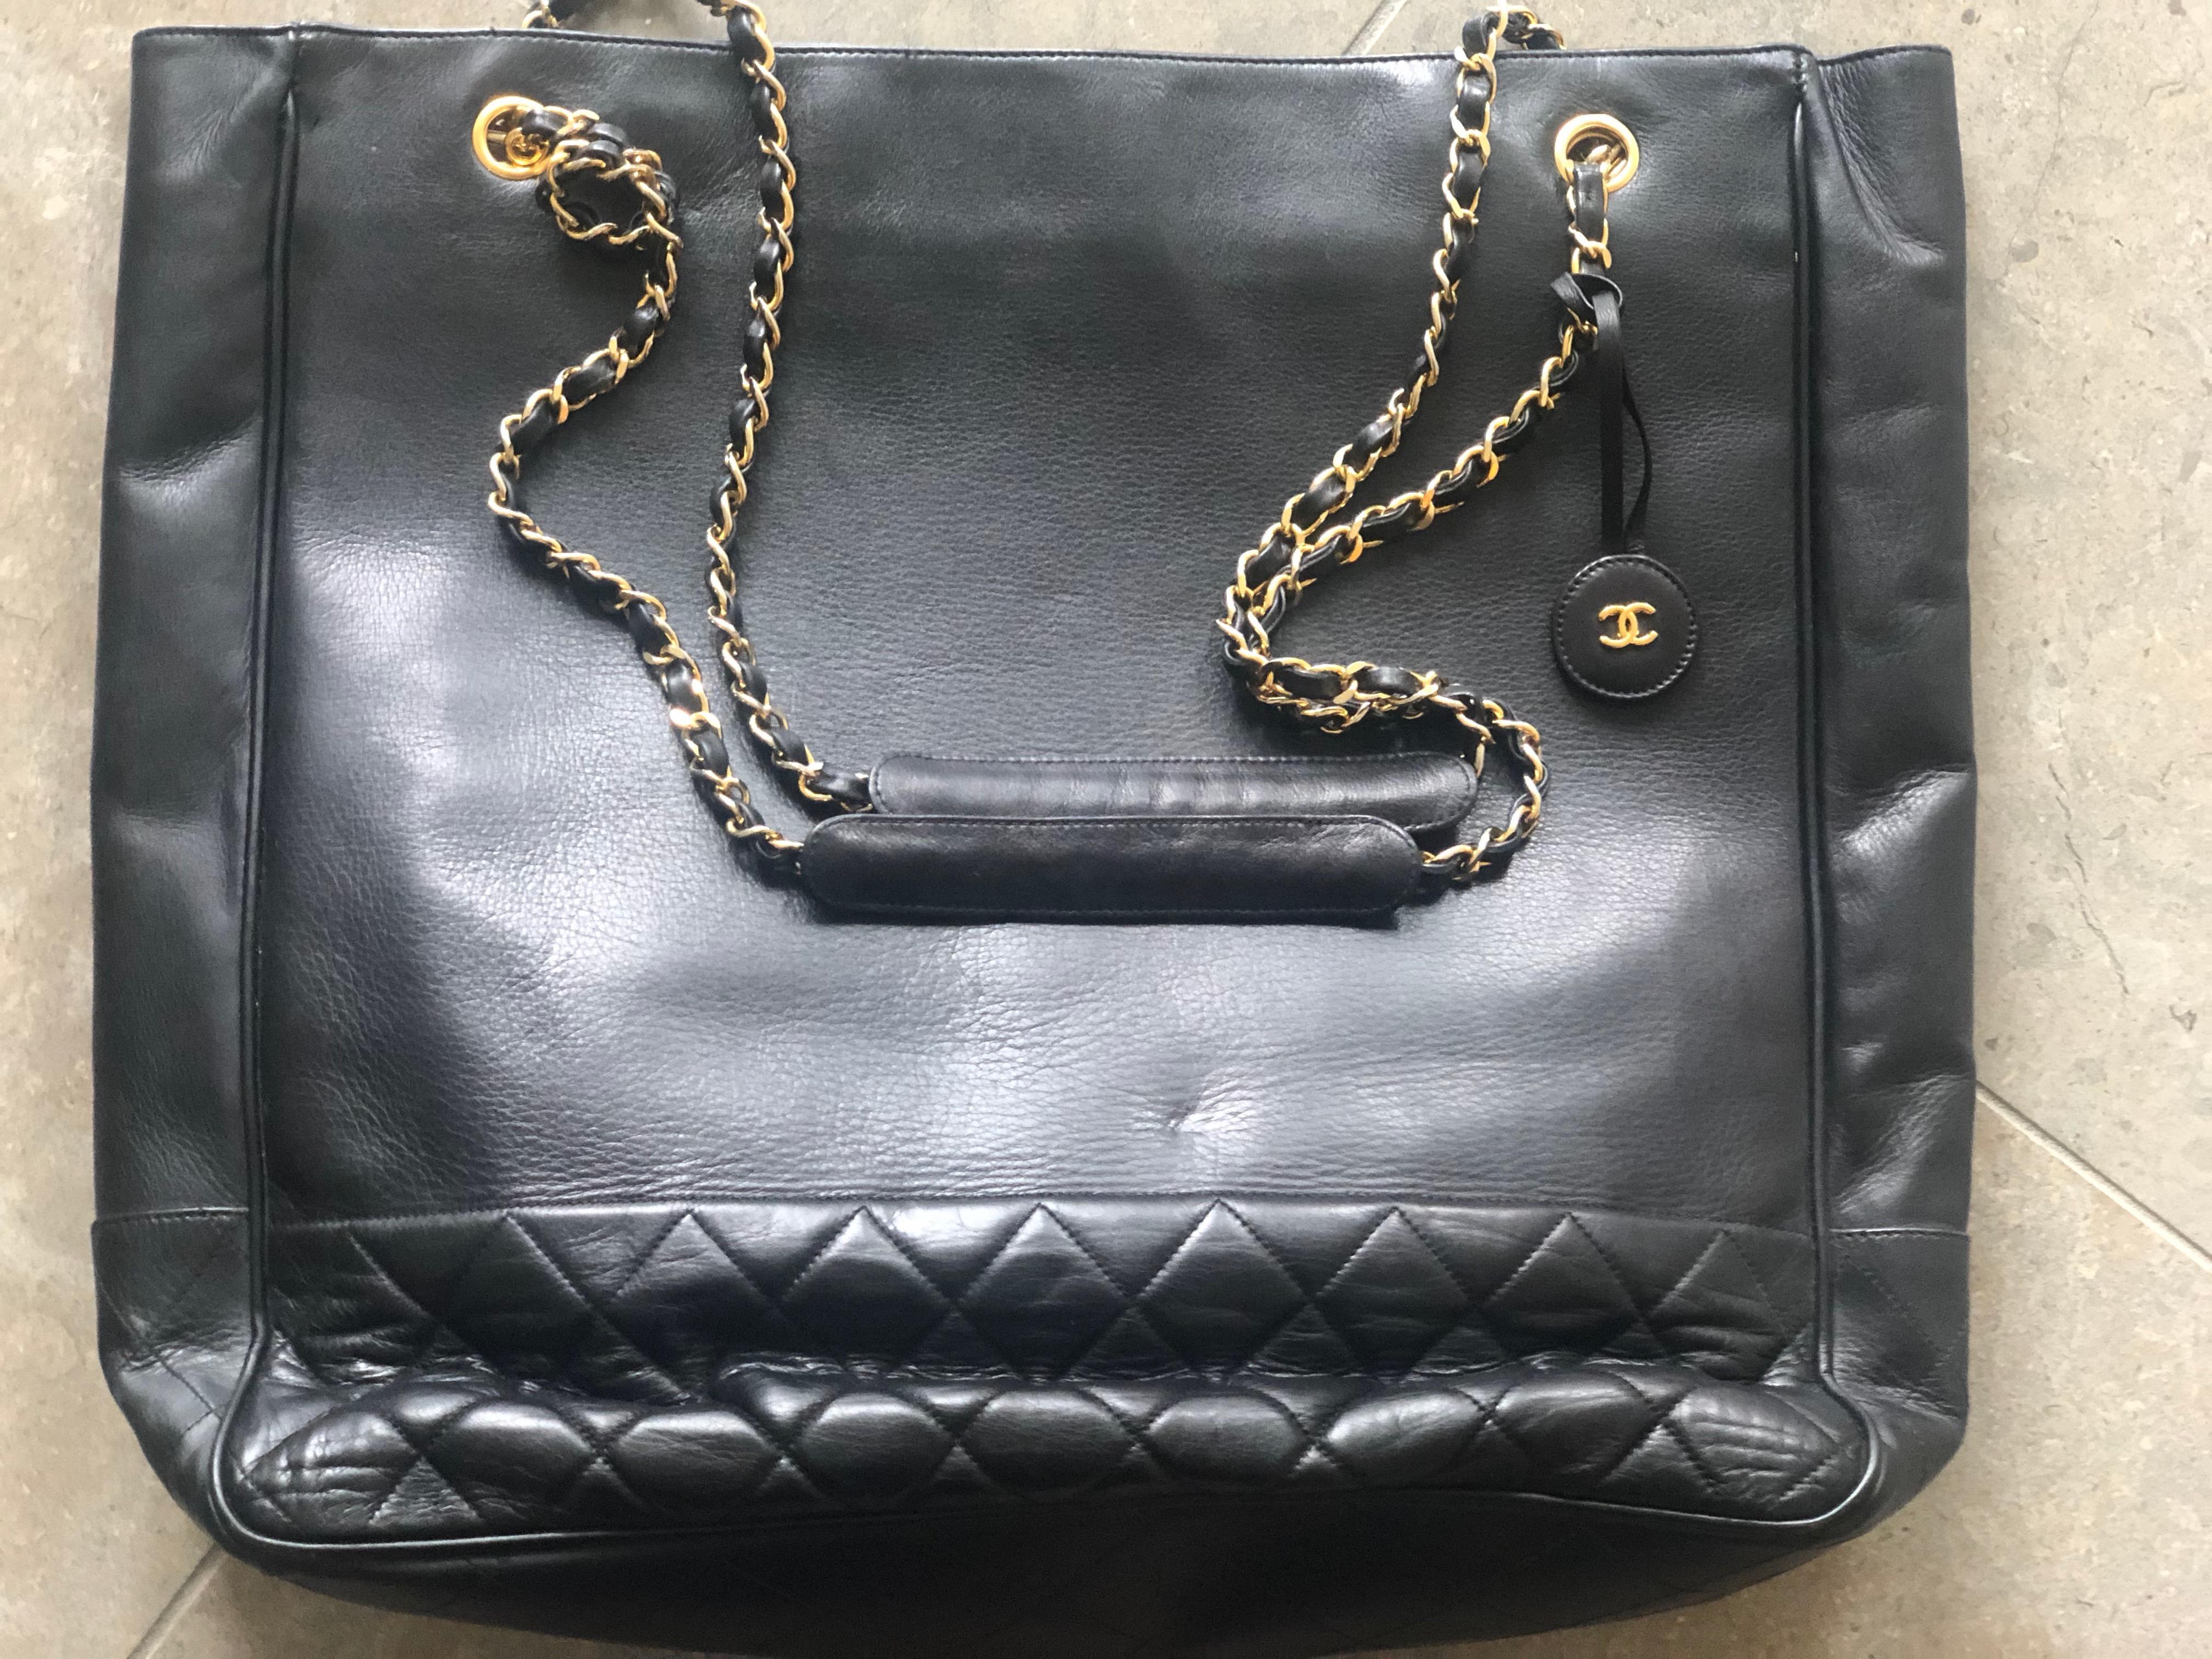 Chanel Large Black Leather Shoulder Bag with Gold Hardware and Quilted Details .
16